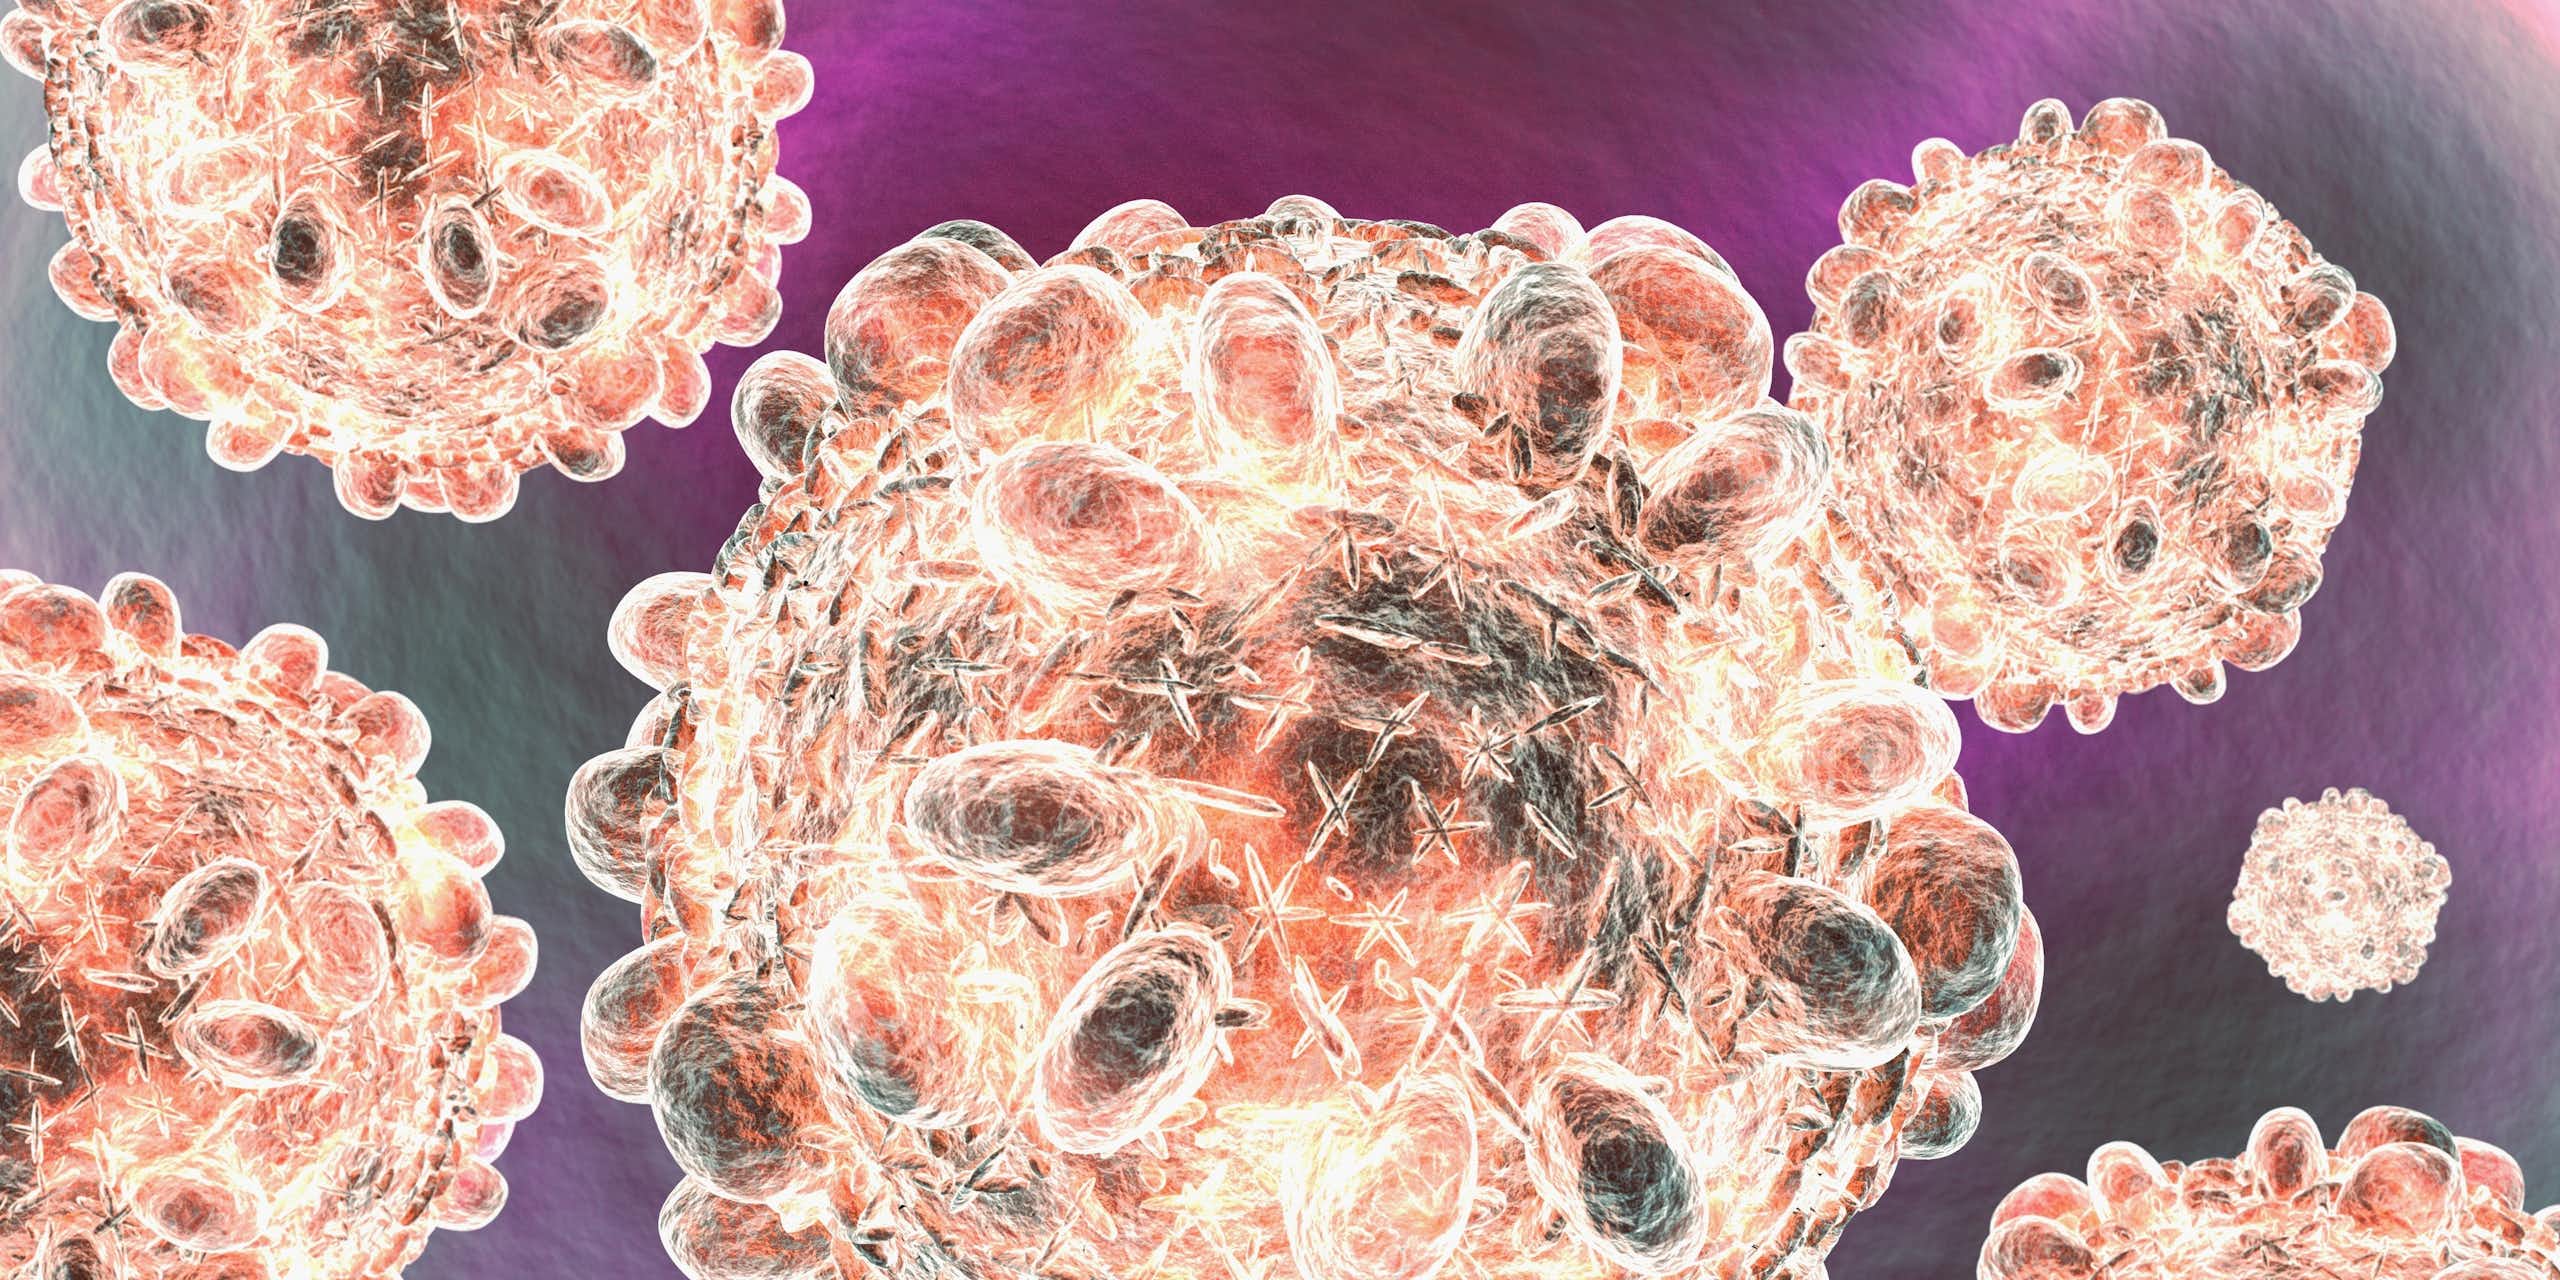 Hepatitis C virus illustration